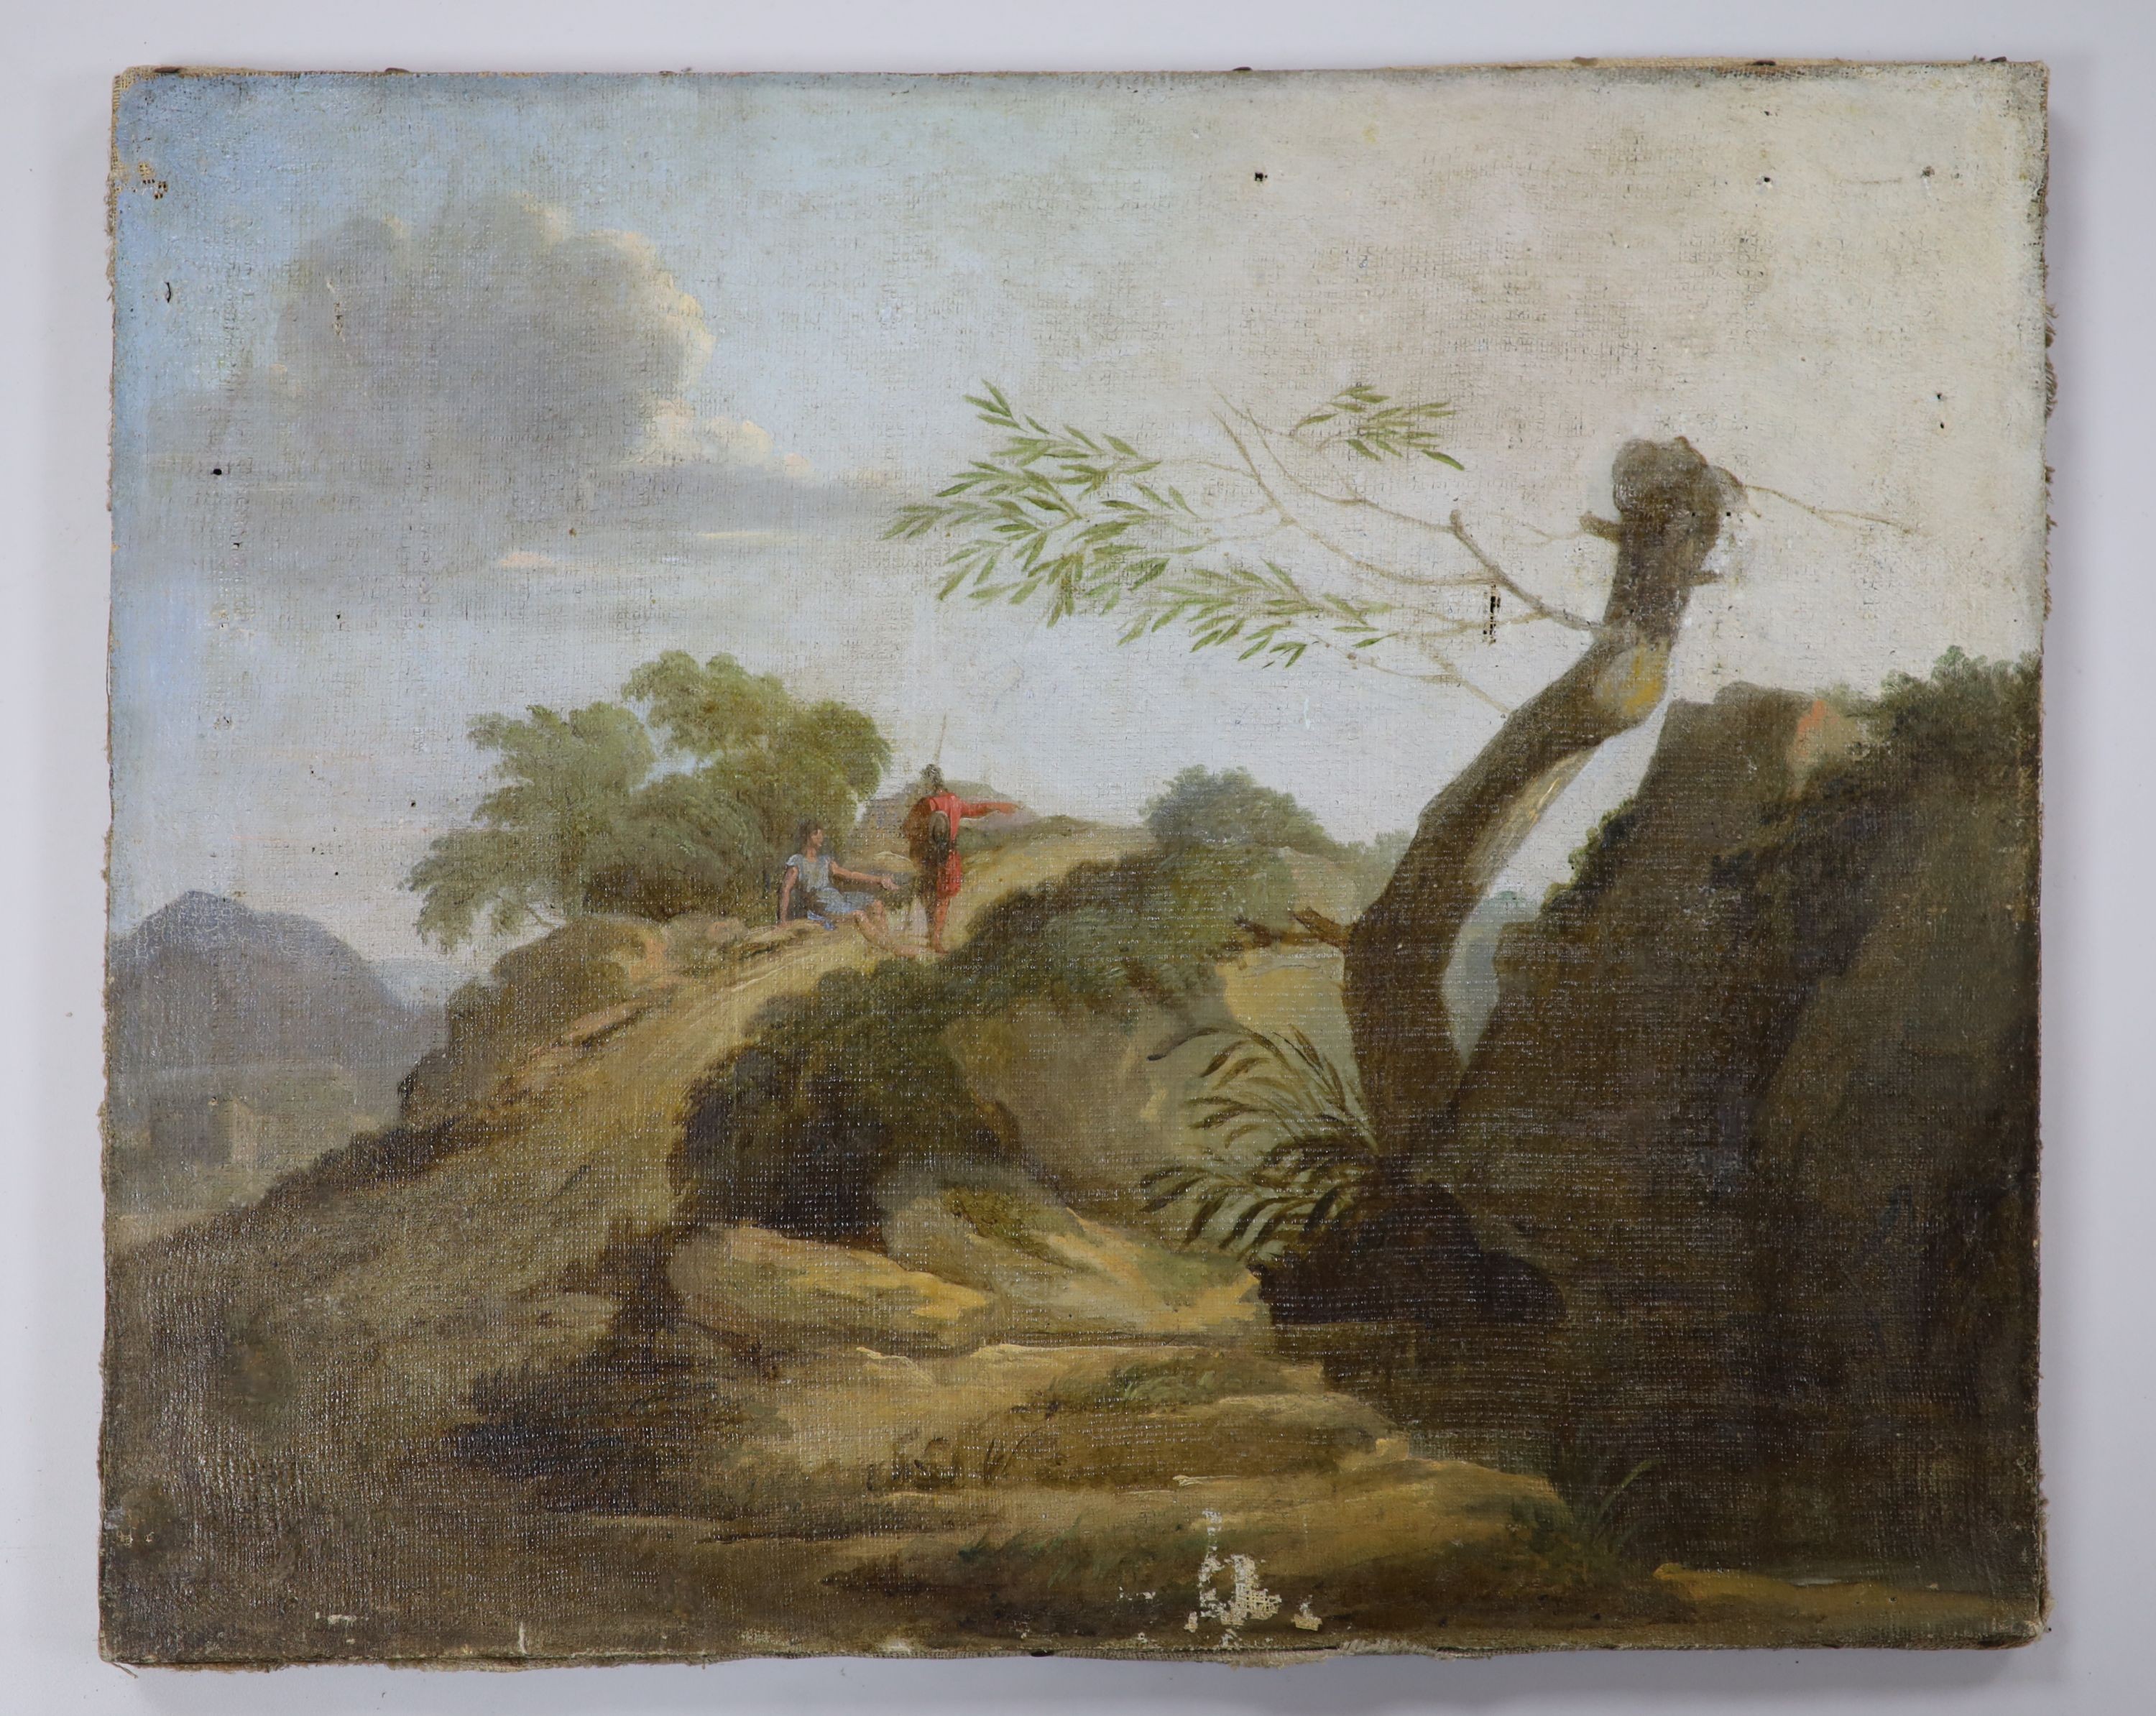 Late 18th century Italian School. Figures on a Mountain Pass. Oil on canvas, unframed 14.5